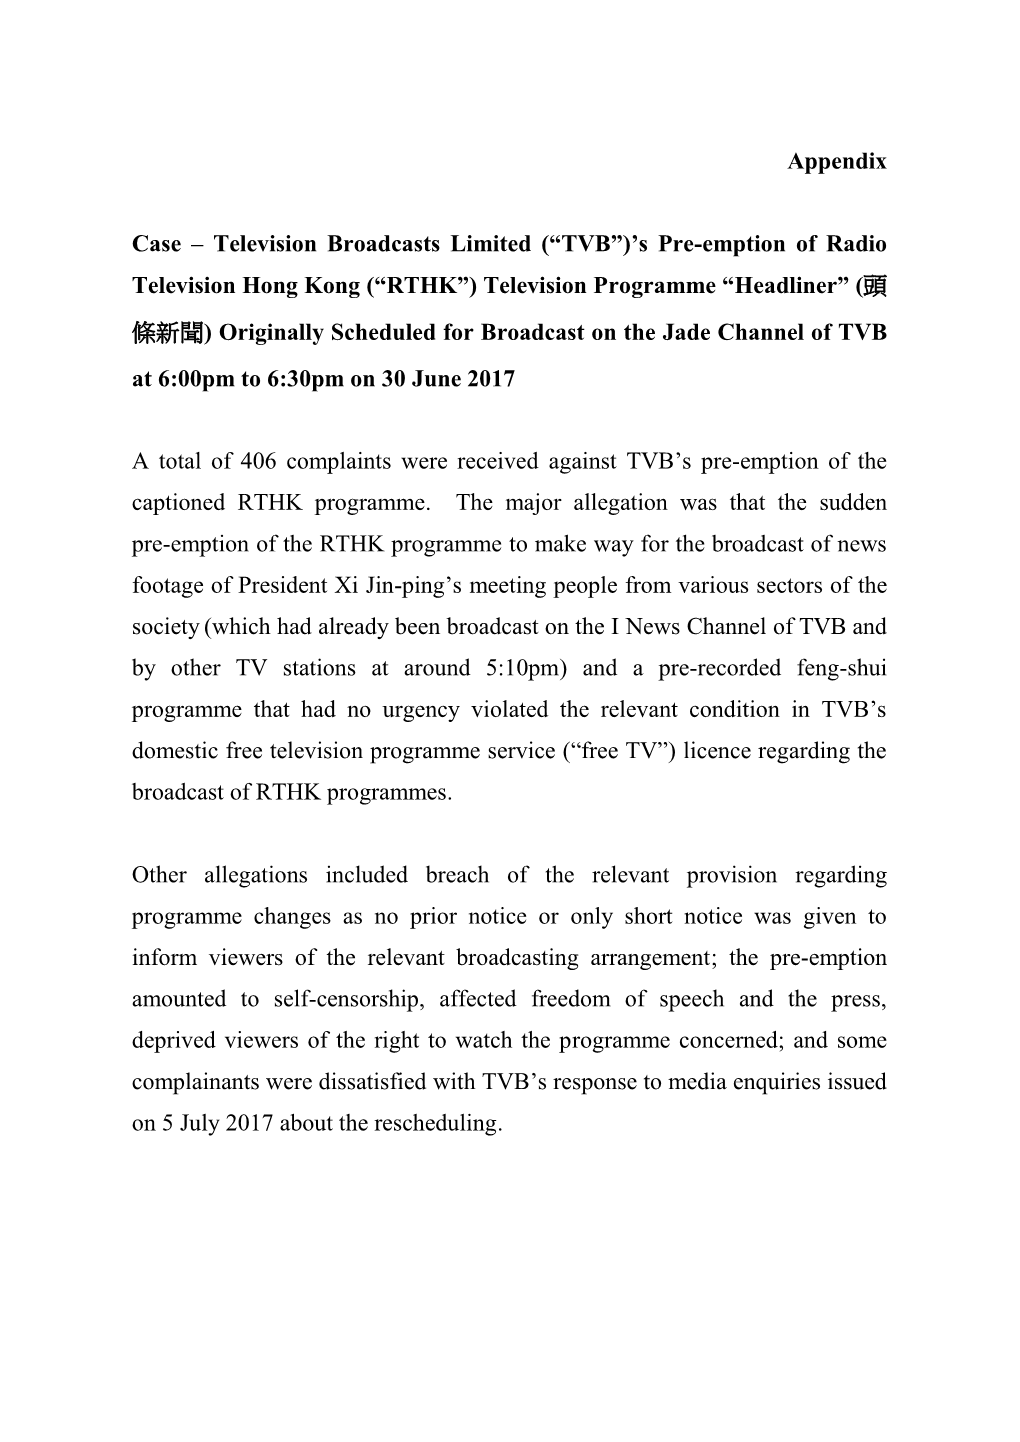 (“TVB”)'S Pre-Emption of Radio Television Hong Kong (“RTHK